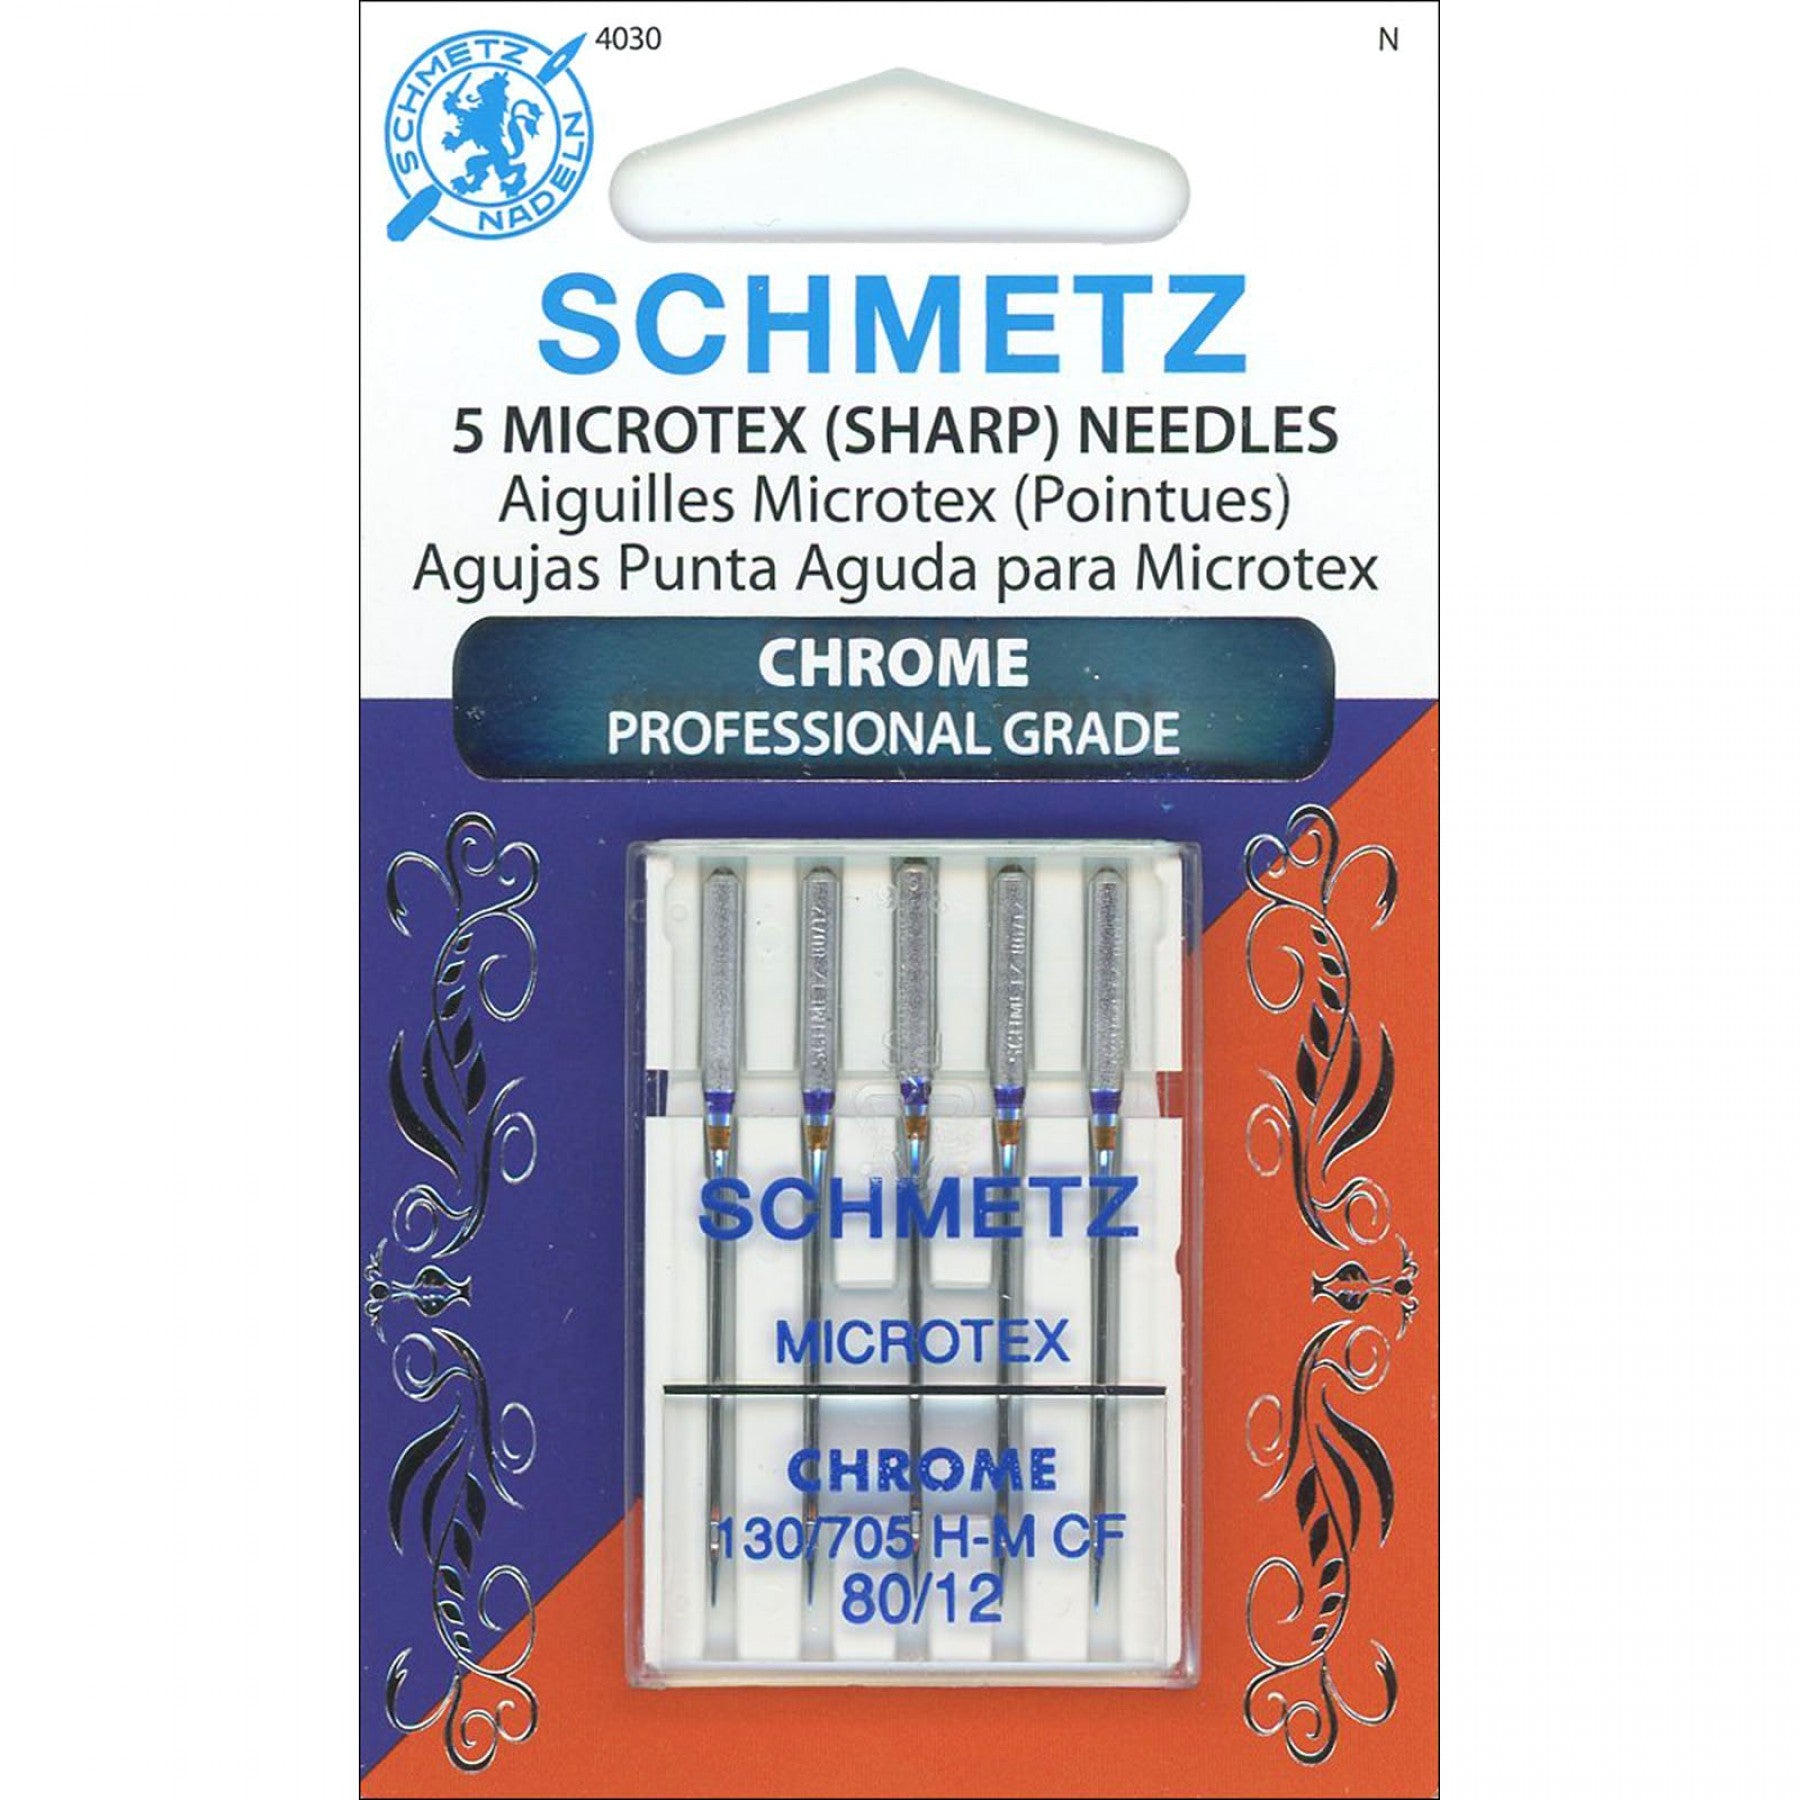 Schmetz Microtex Chrome Needle Professional Grade 80/12